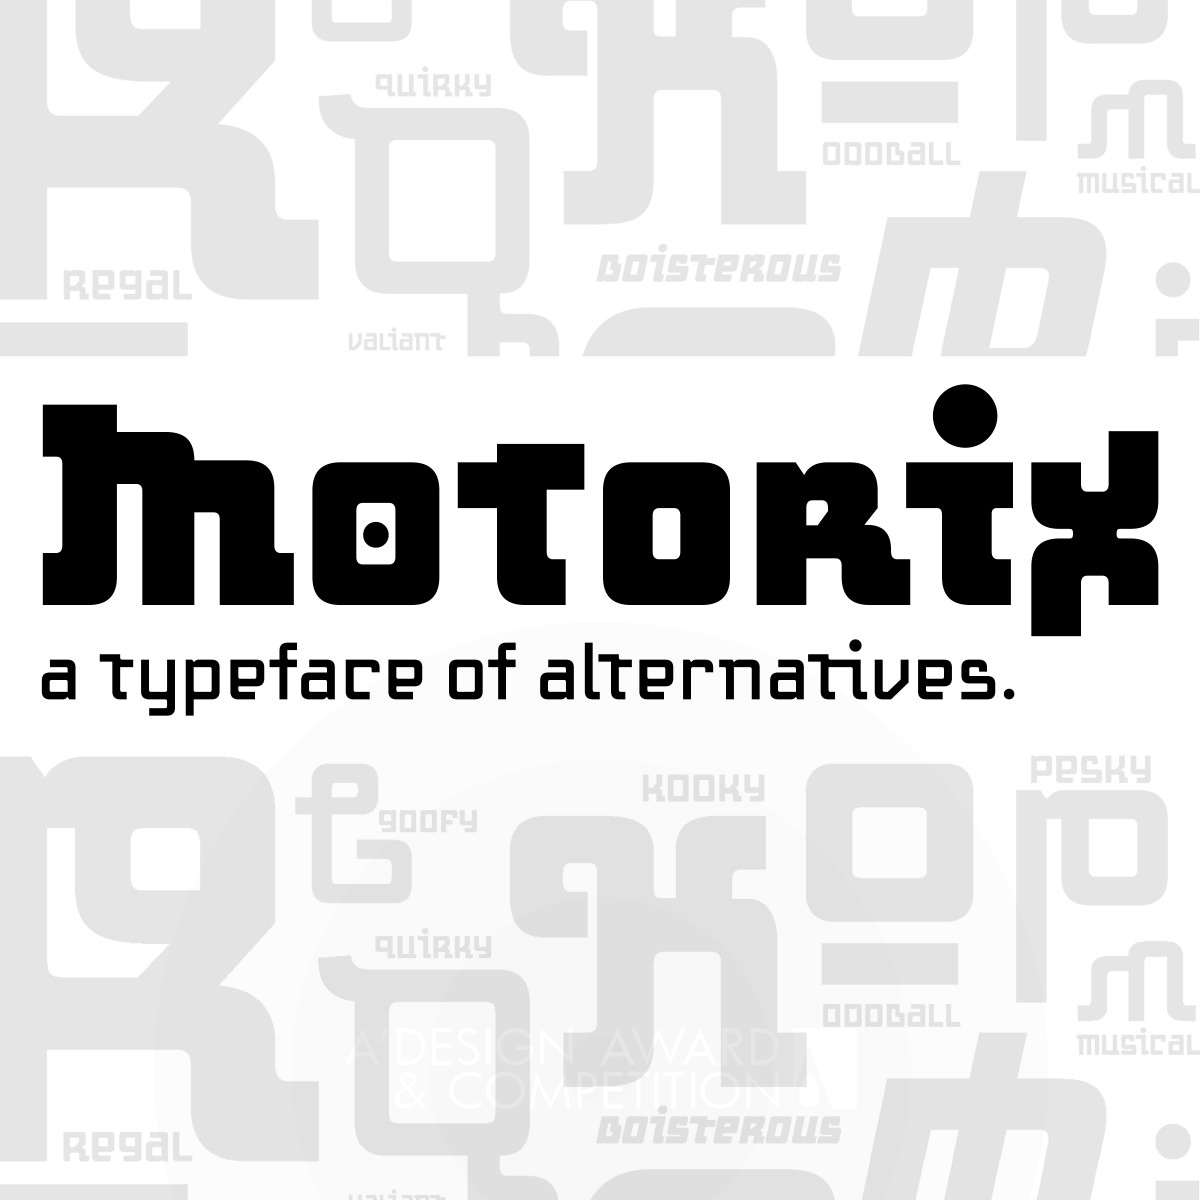 Motorix Typeface by Monica Maccaux